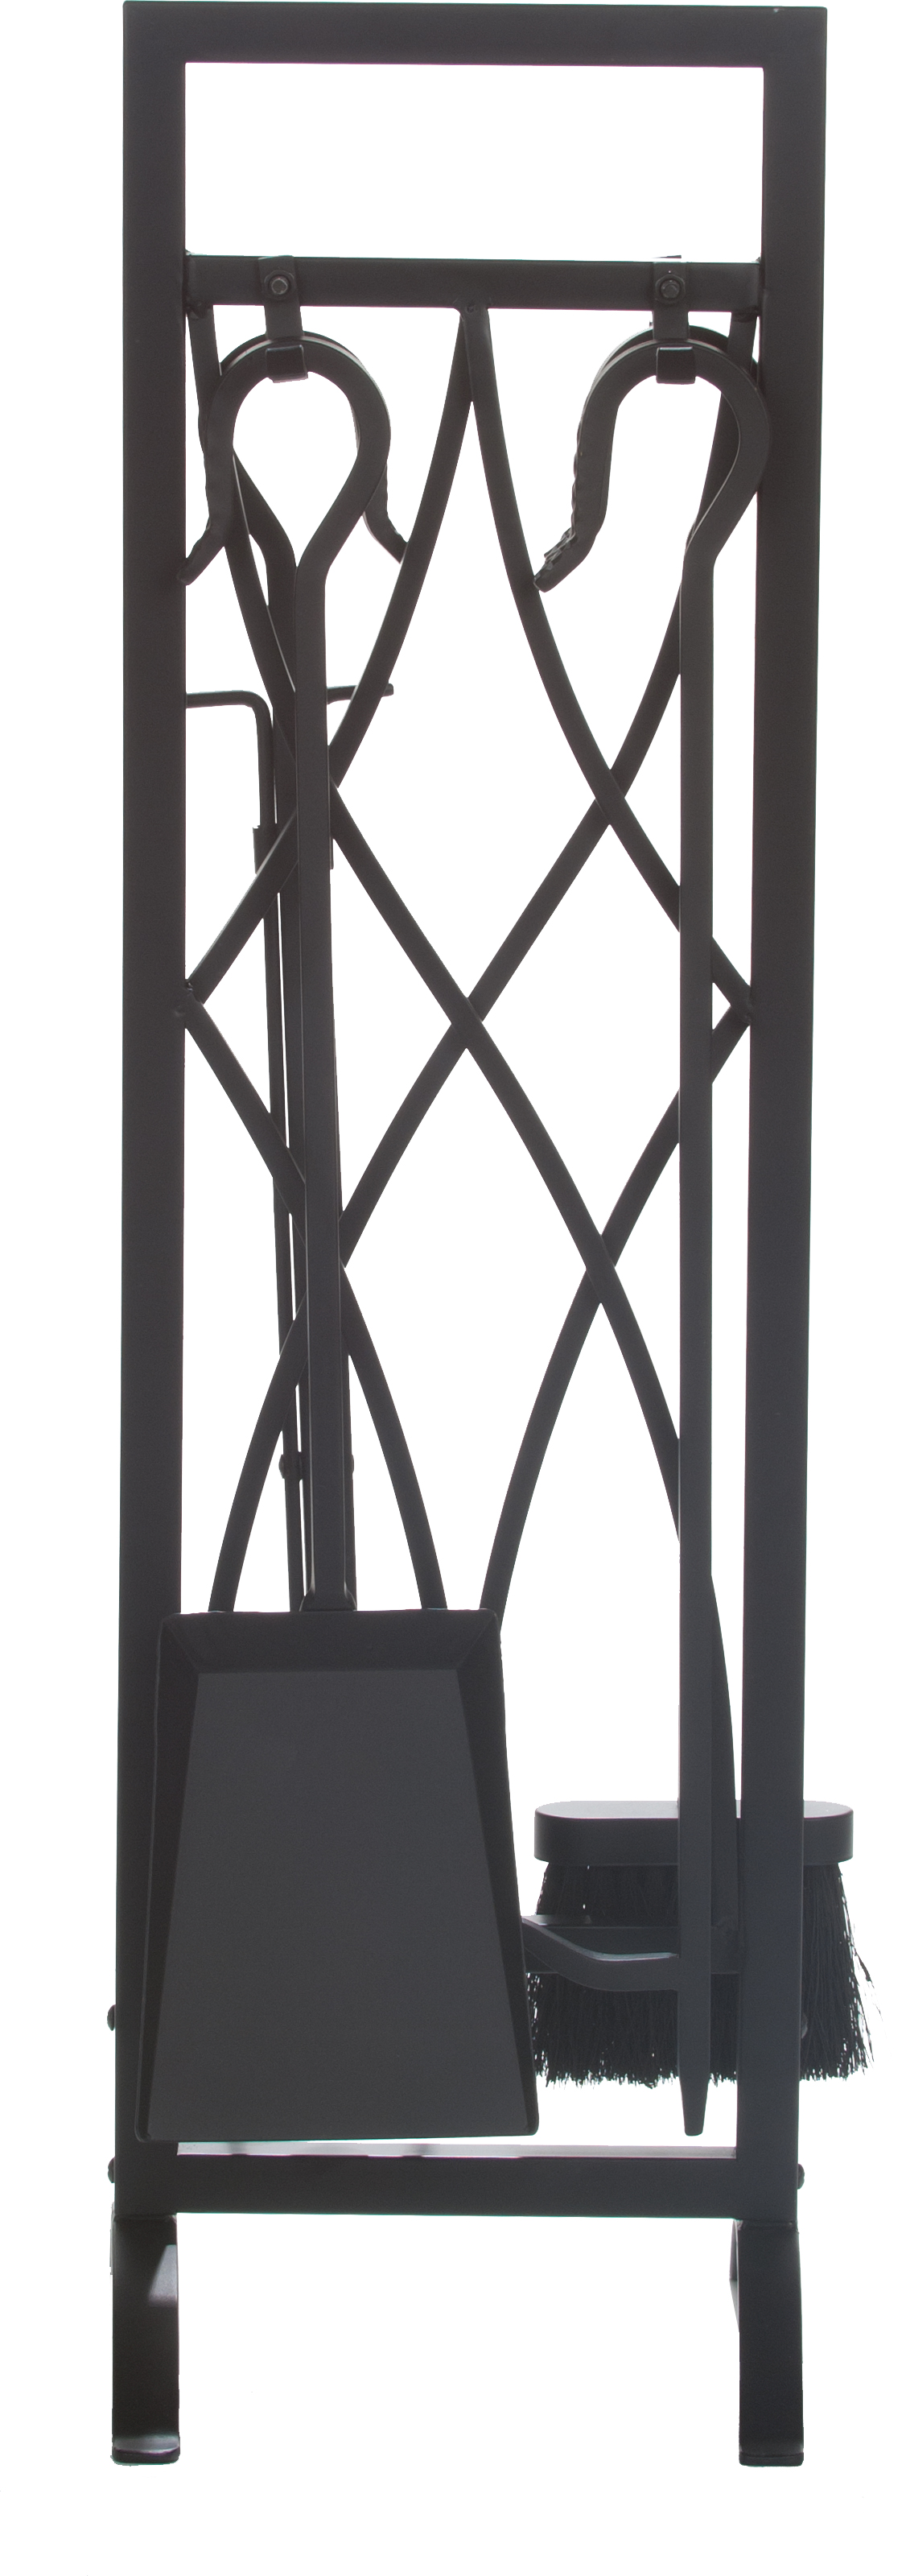 5 piece black wrought iron hanging toolset product image